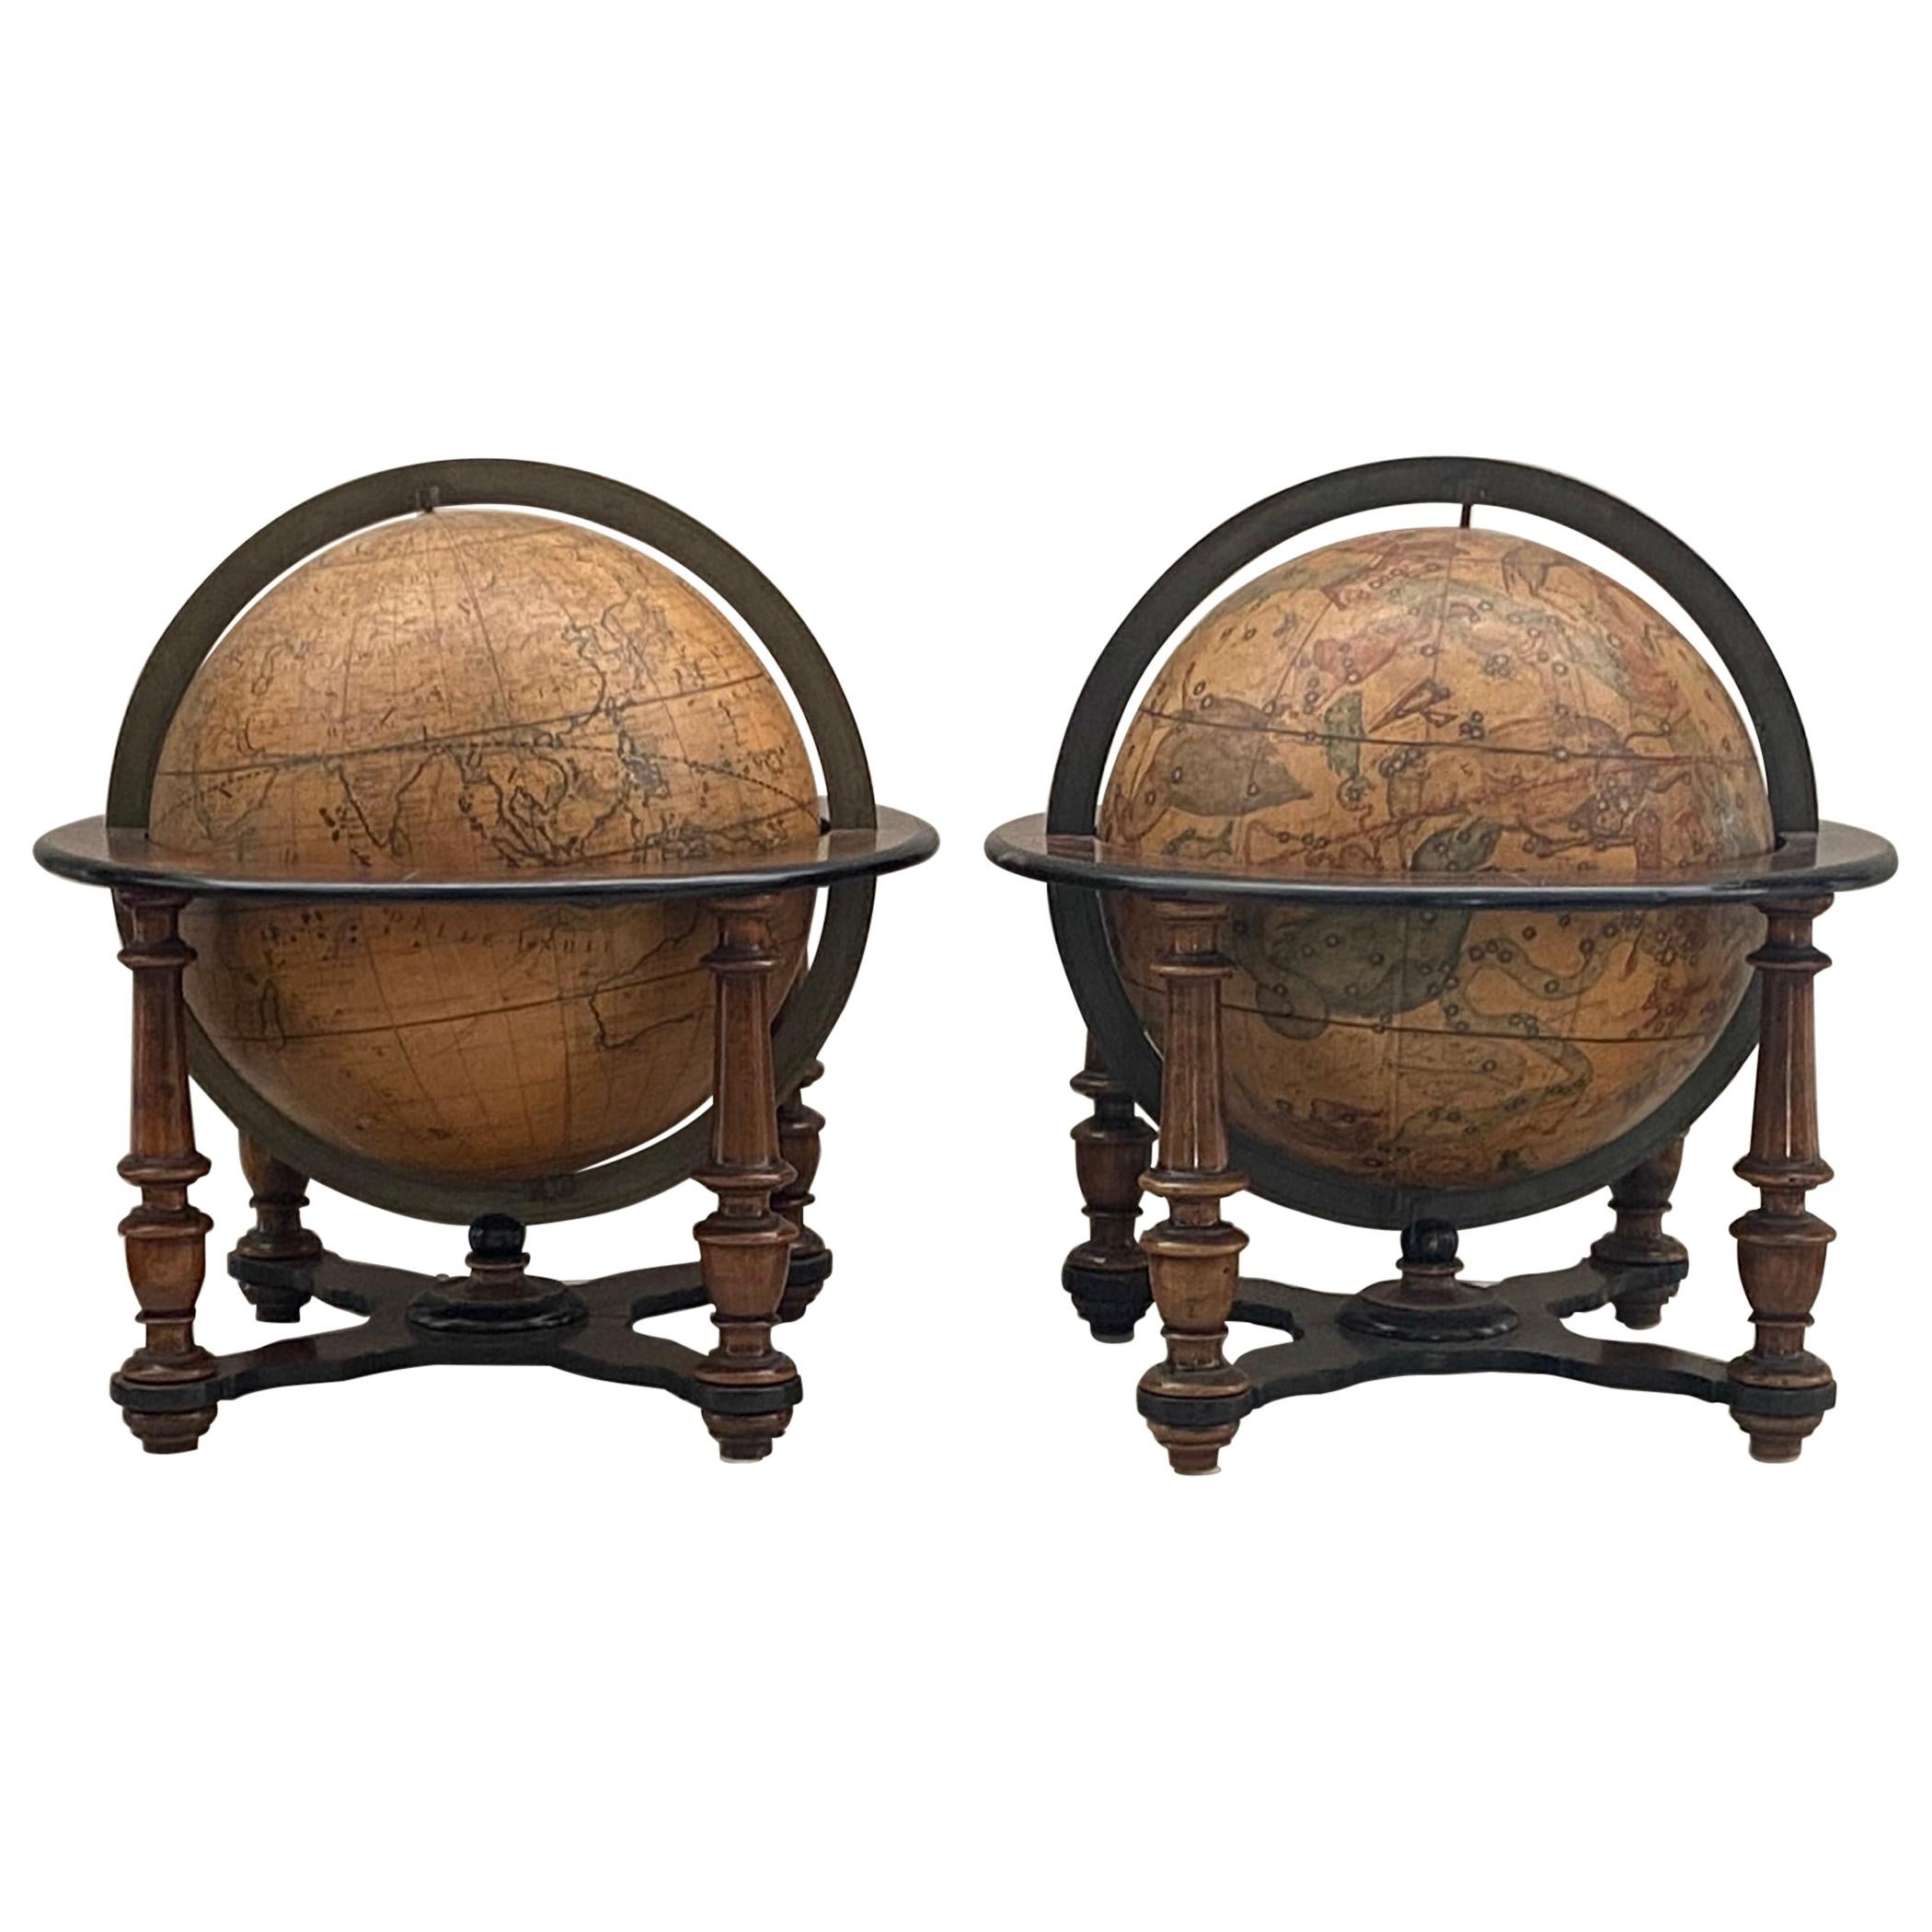 Italian Table Globes circa 19th Century After Cassini